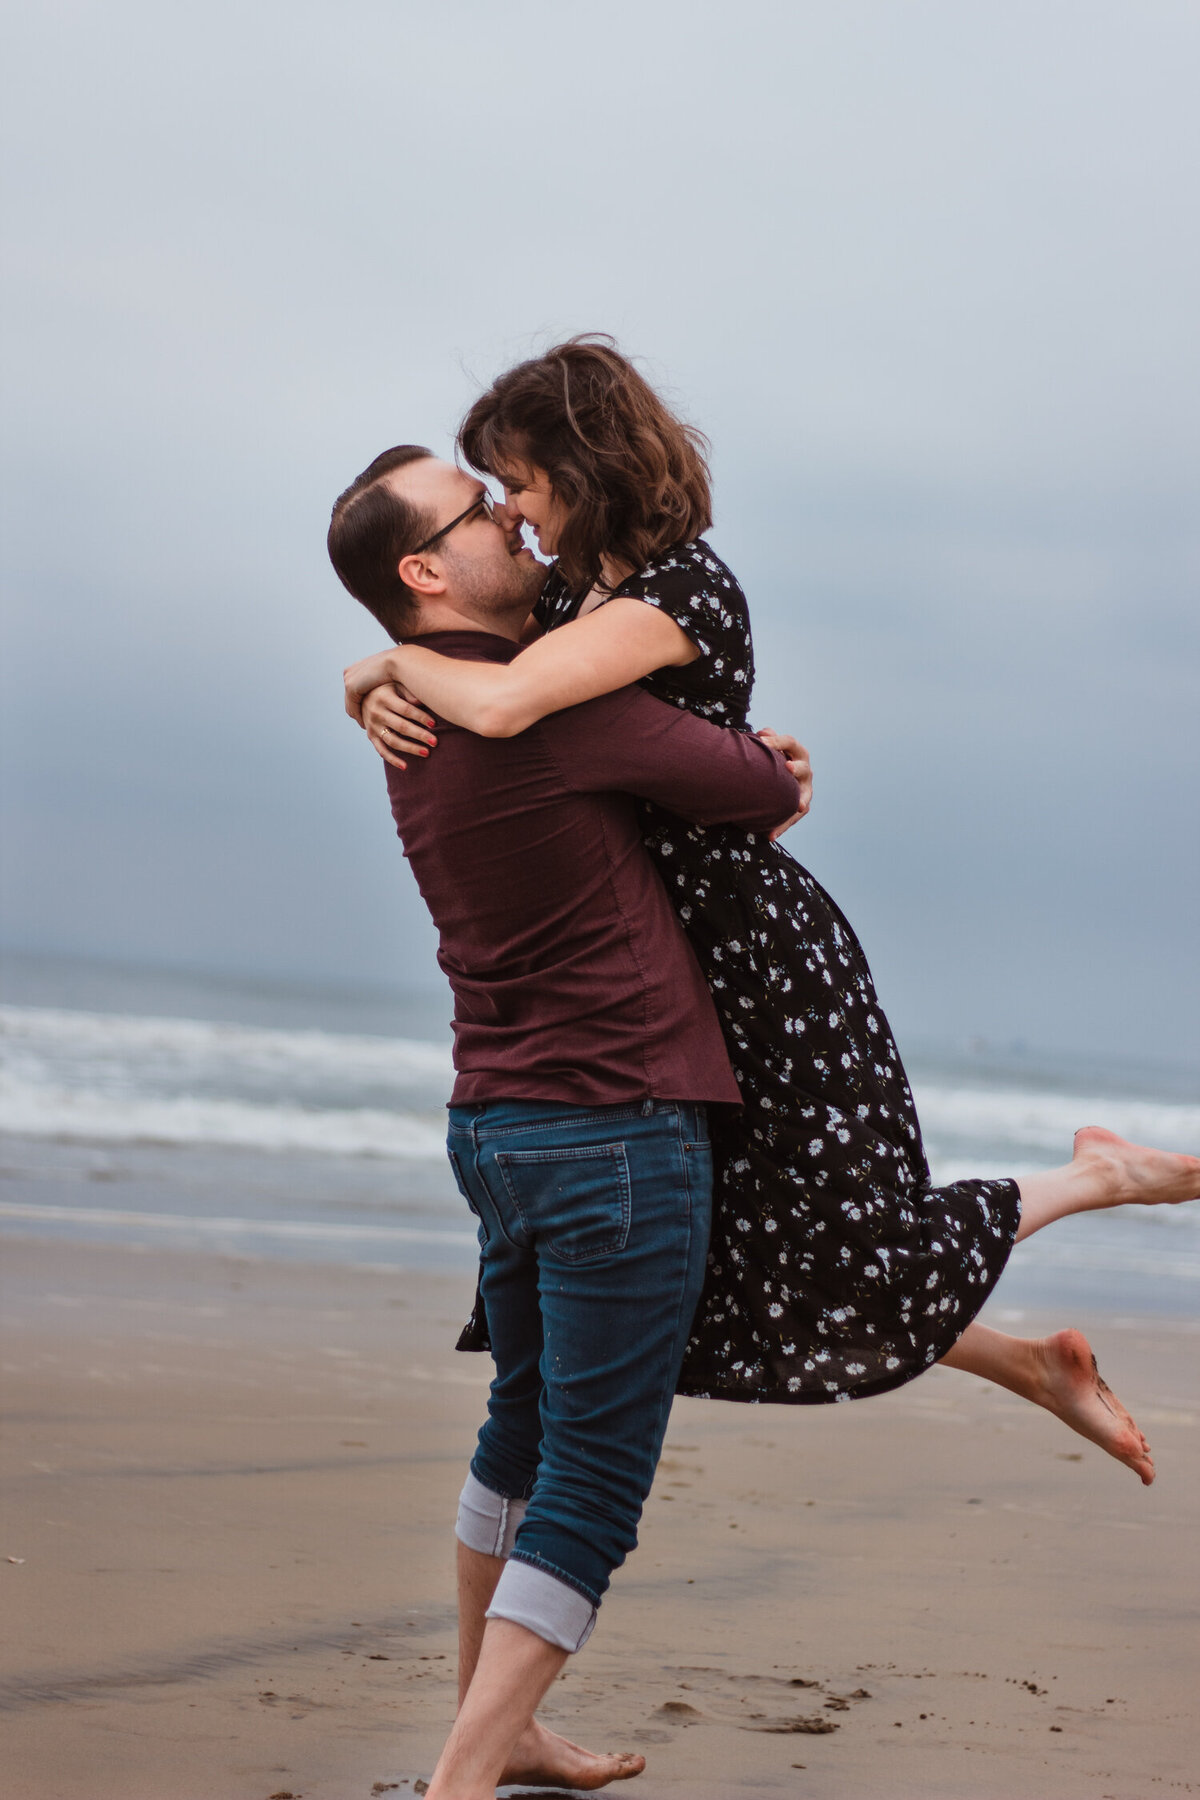 socal_beach_engagement_couples_romantic_028